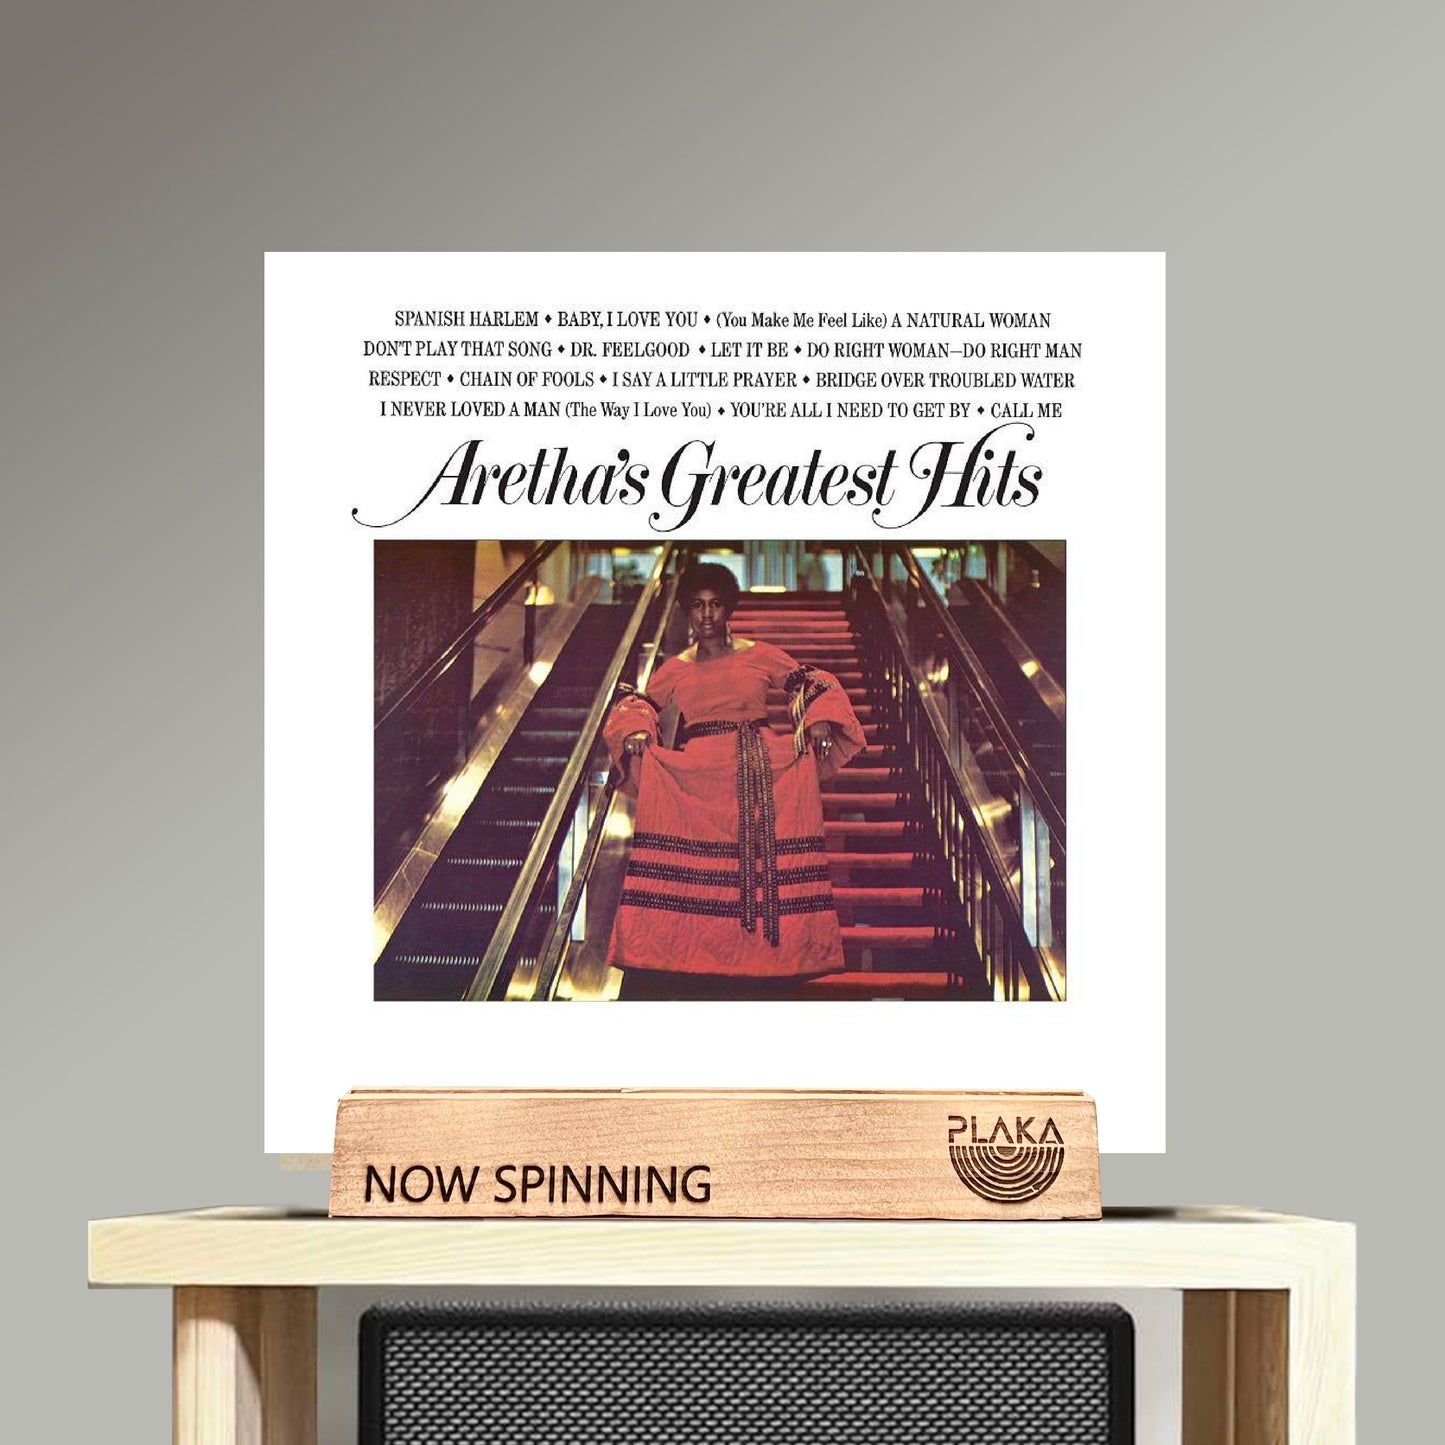 Aretha Franklin - Greatest Hits